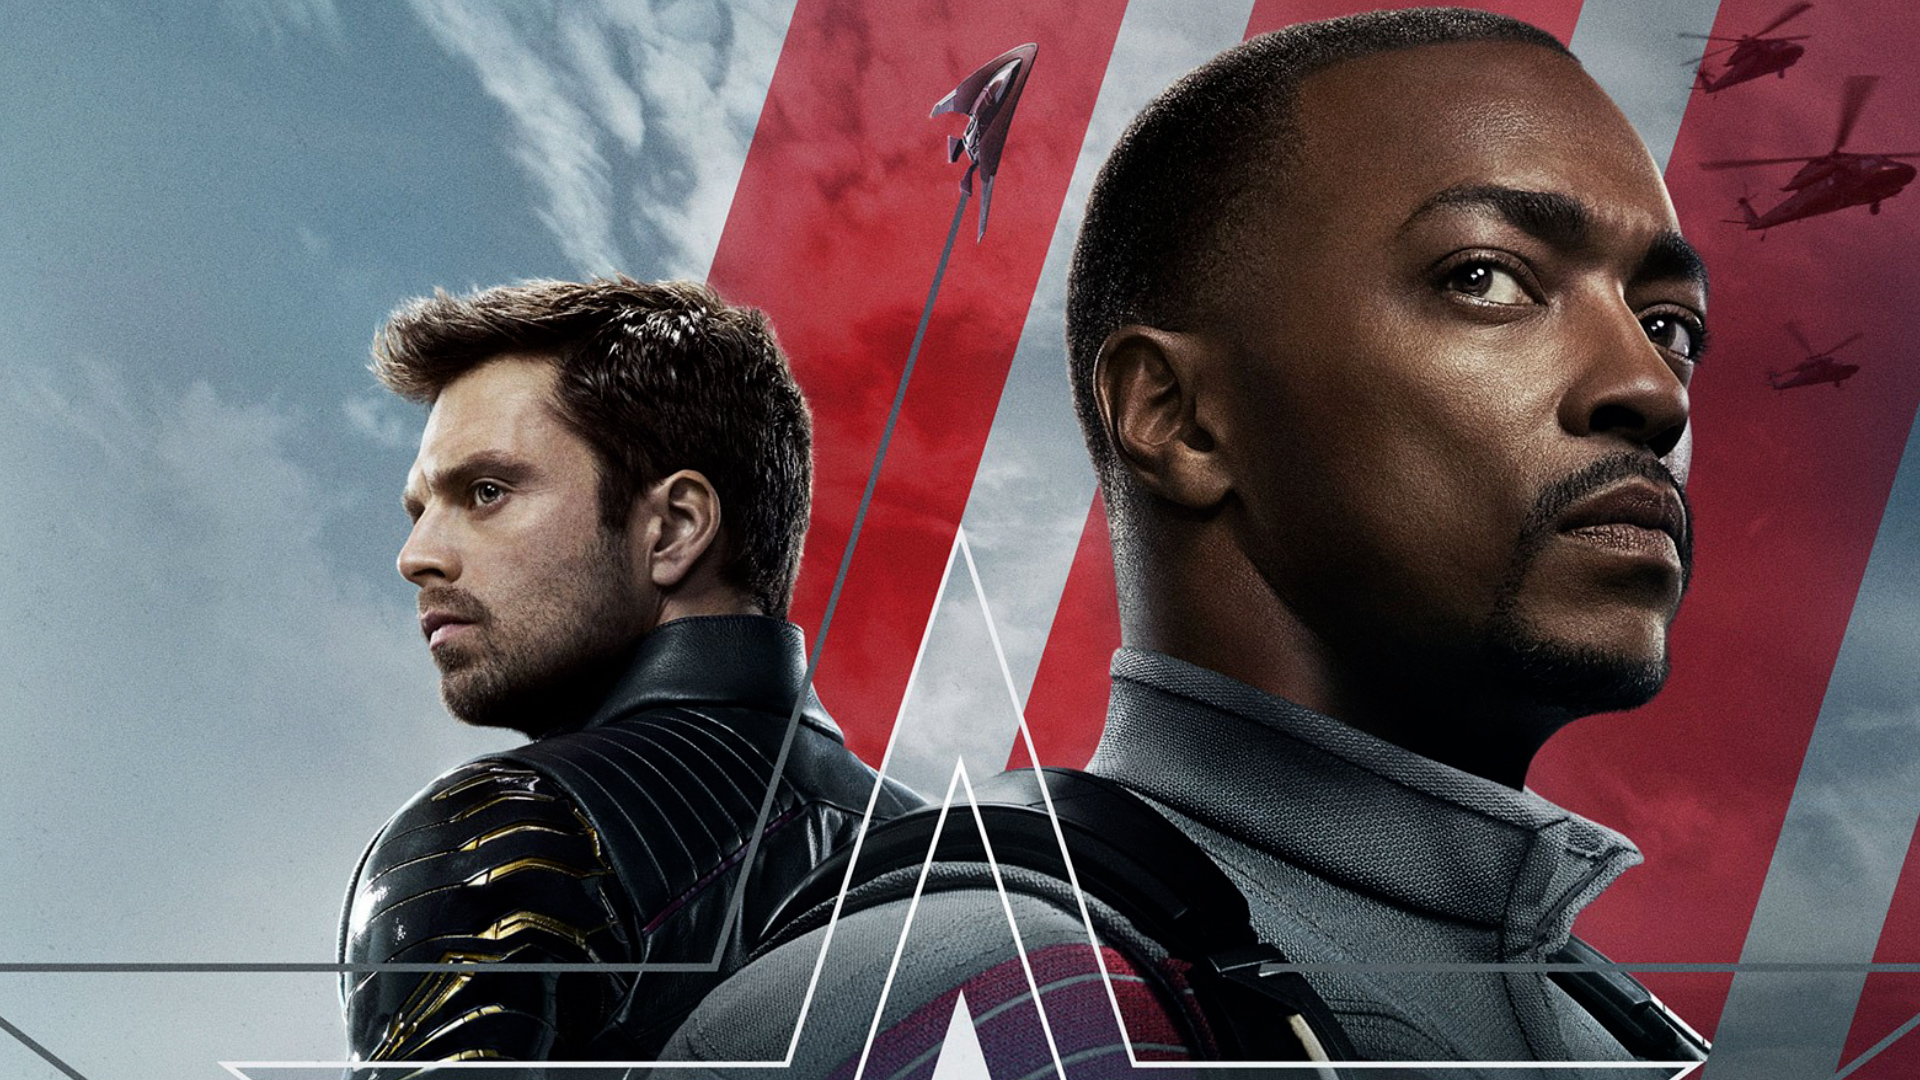 La miniserie "The Falcon and The Winter Soldier" funcionó como una antesala de la historia que contará "Capitán América 4". (Marvel Studios)